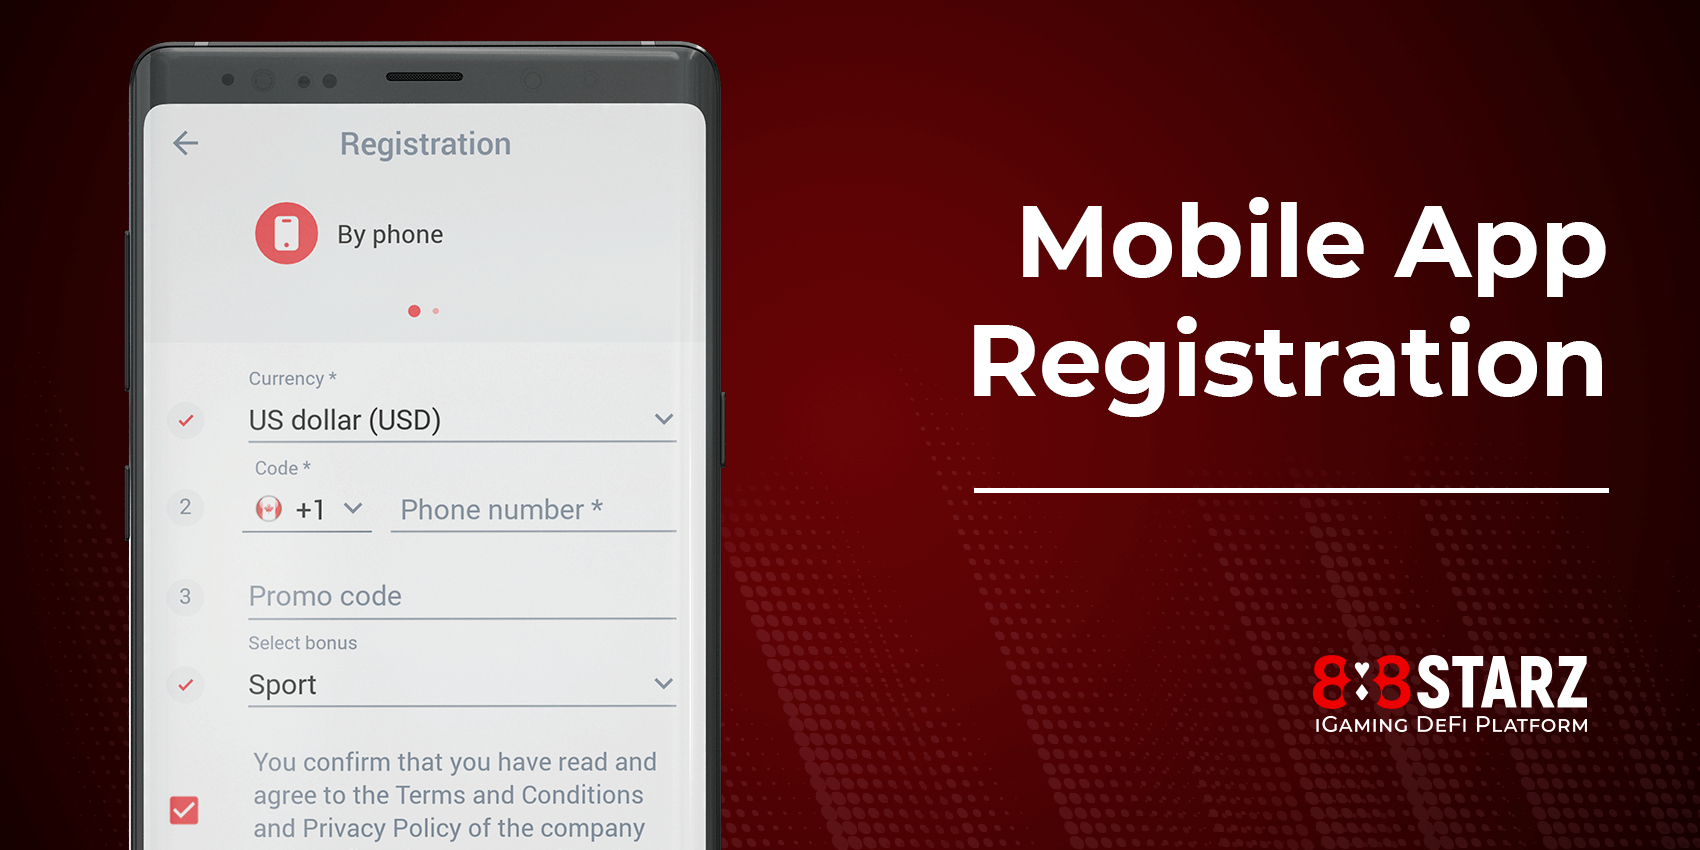 Registration at 888Starz using mobile application